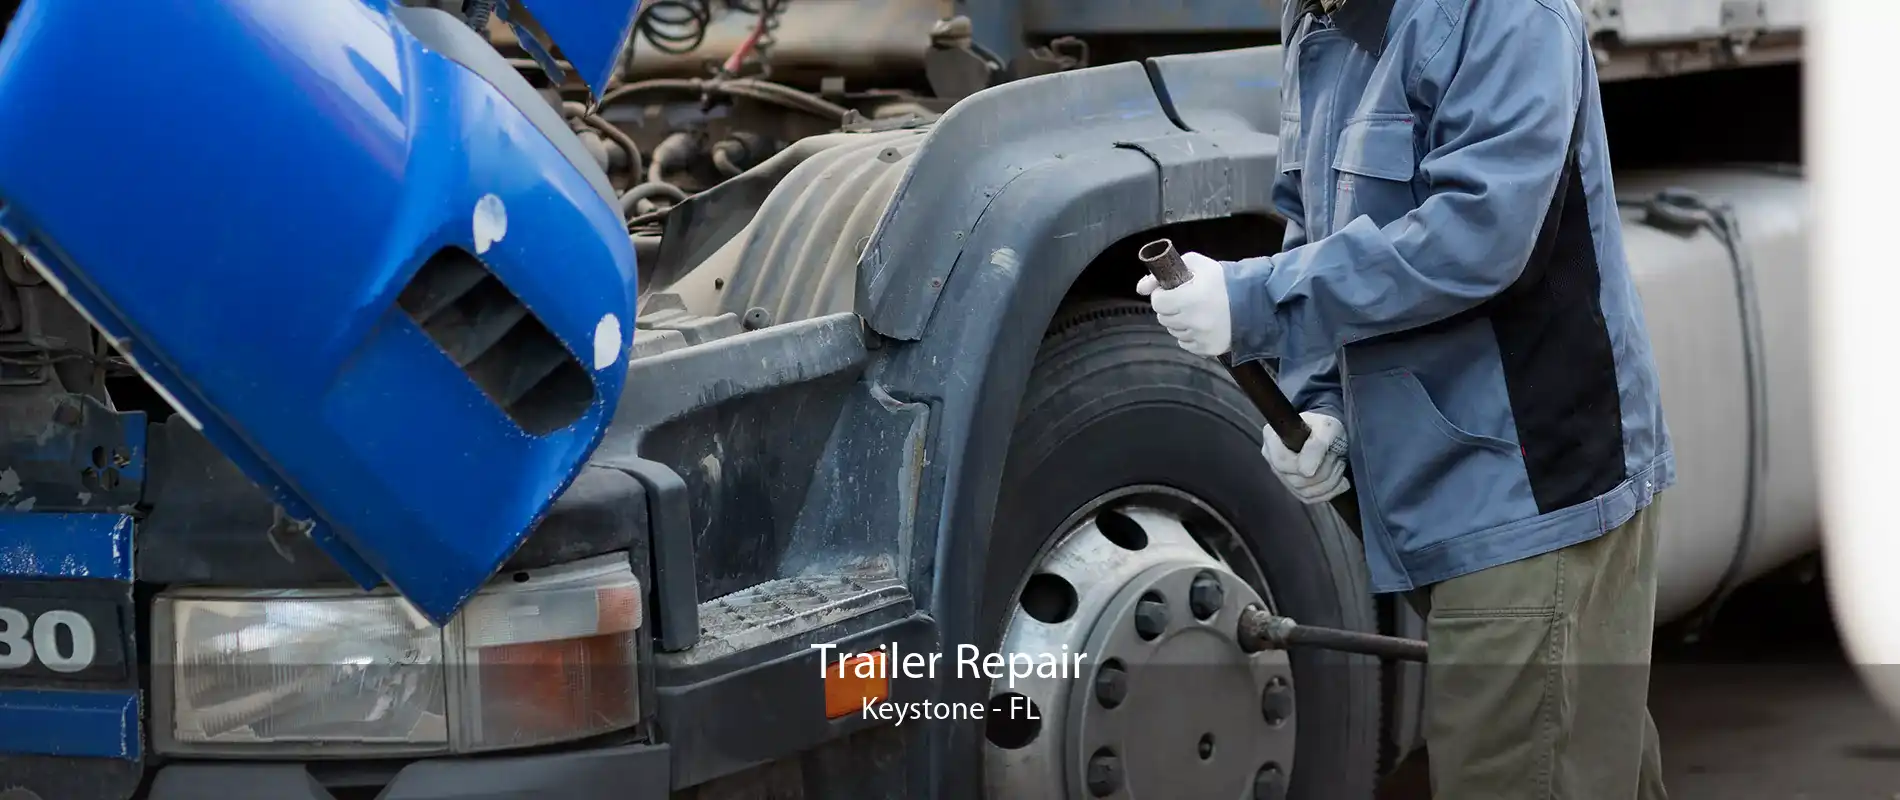 Trailer Repair Keystone - FL